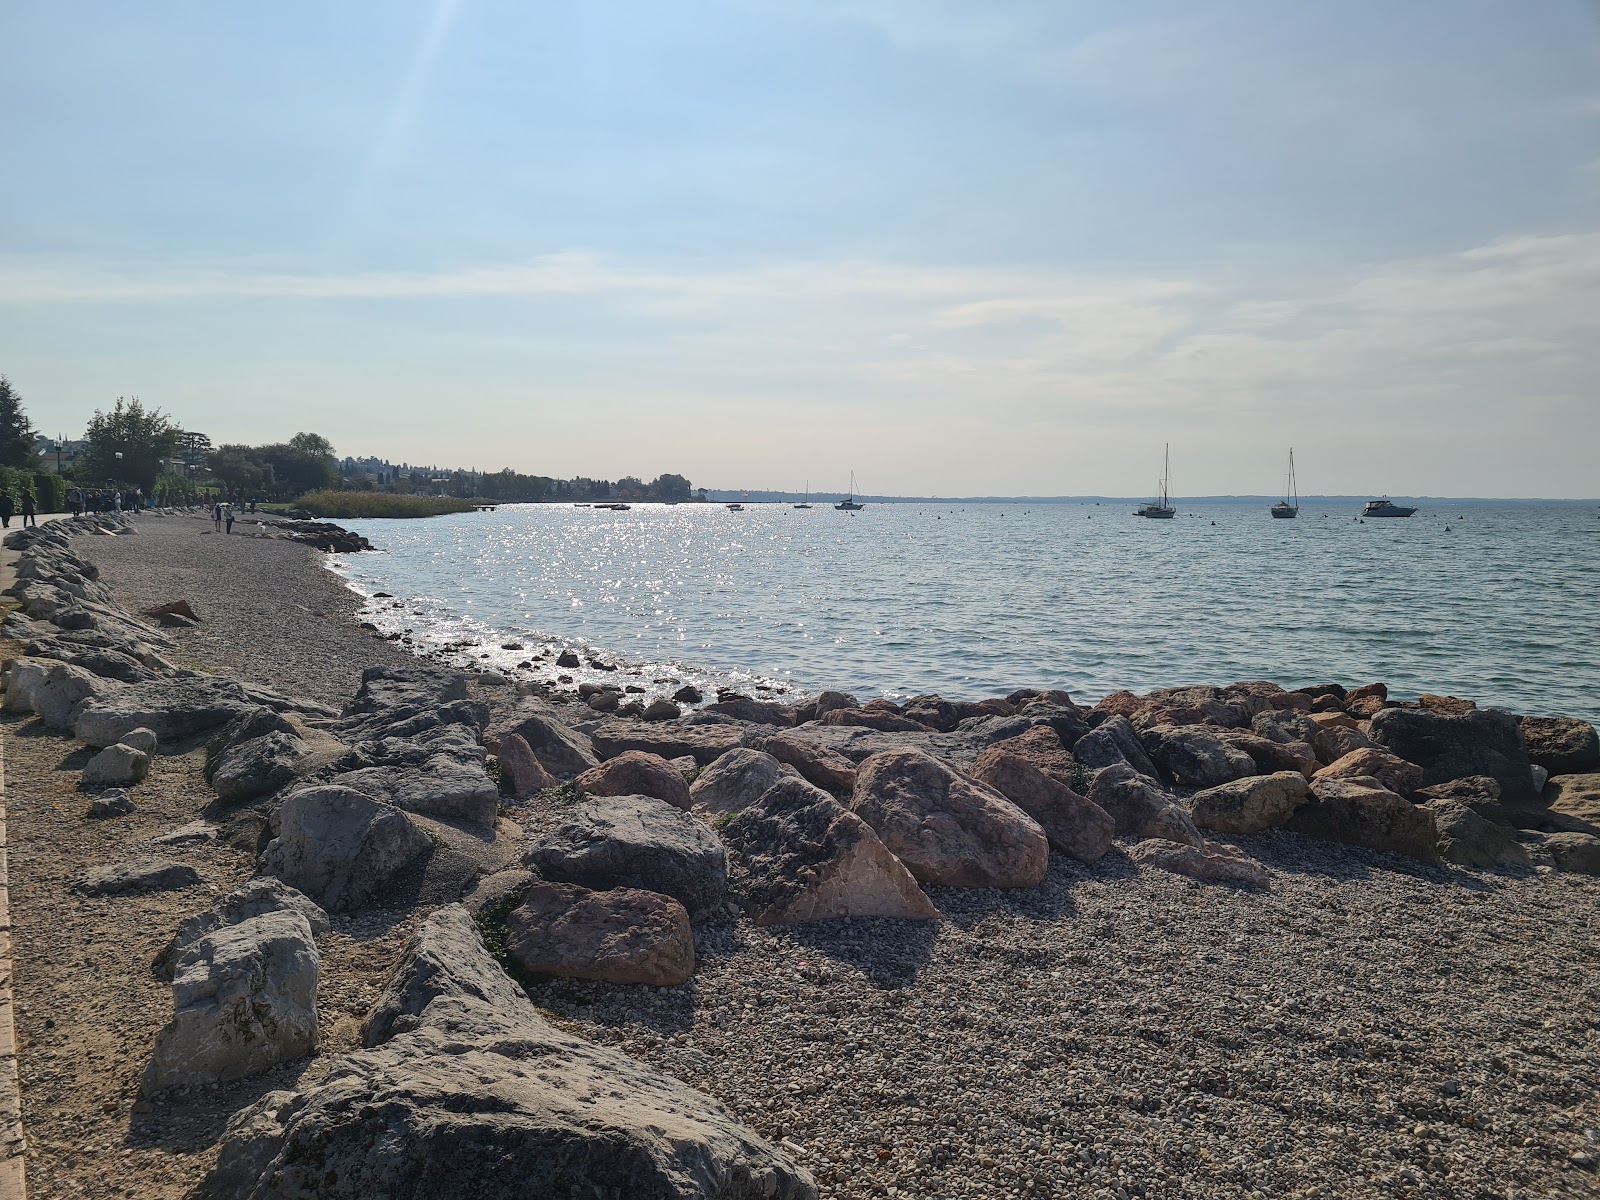 Spiaggia Lido di Cisano'in fotoğrafı geniş plaj ile birlikte